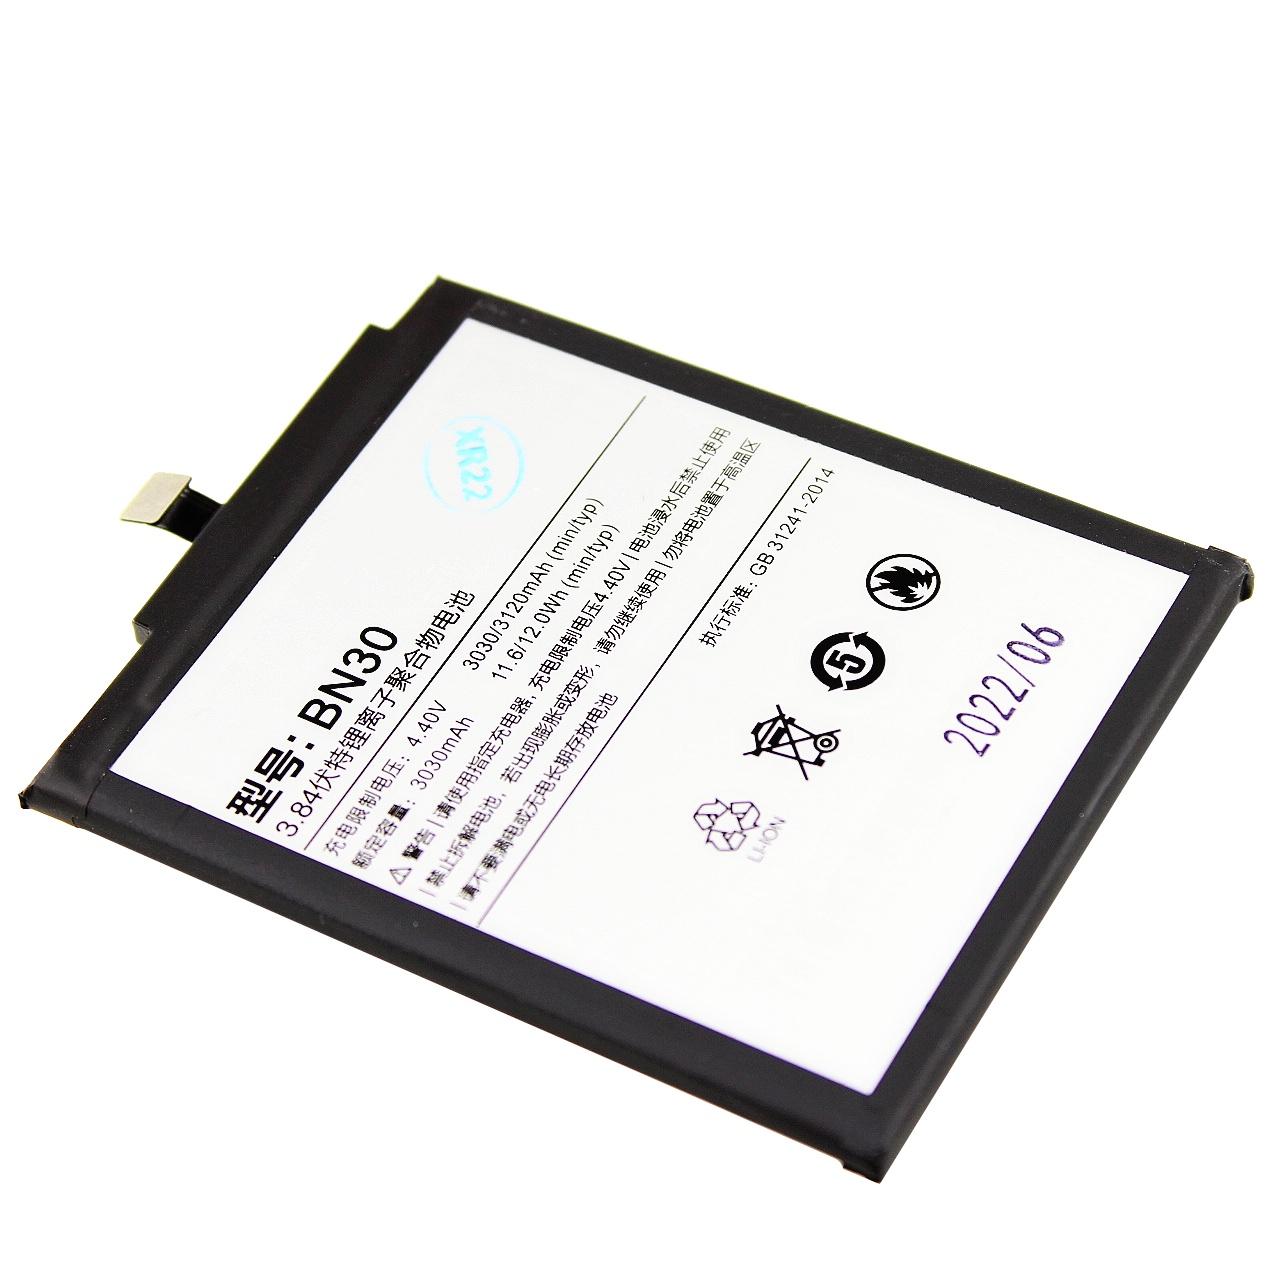 Battery BN30 Xiaomi Redmi 4A 3030 mAh